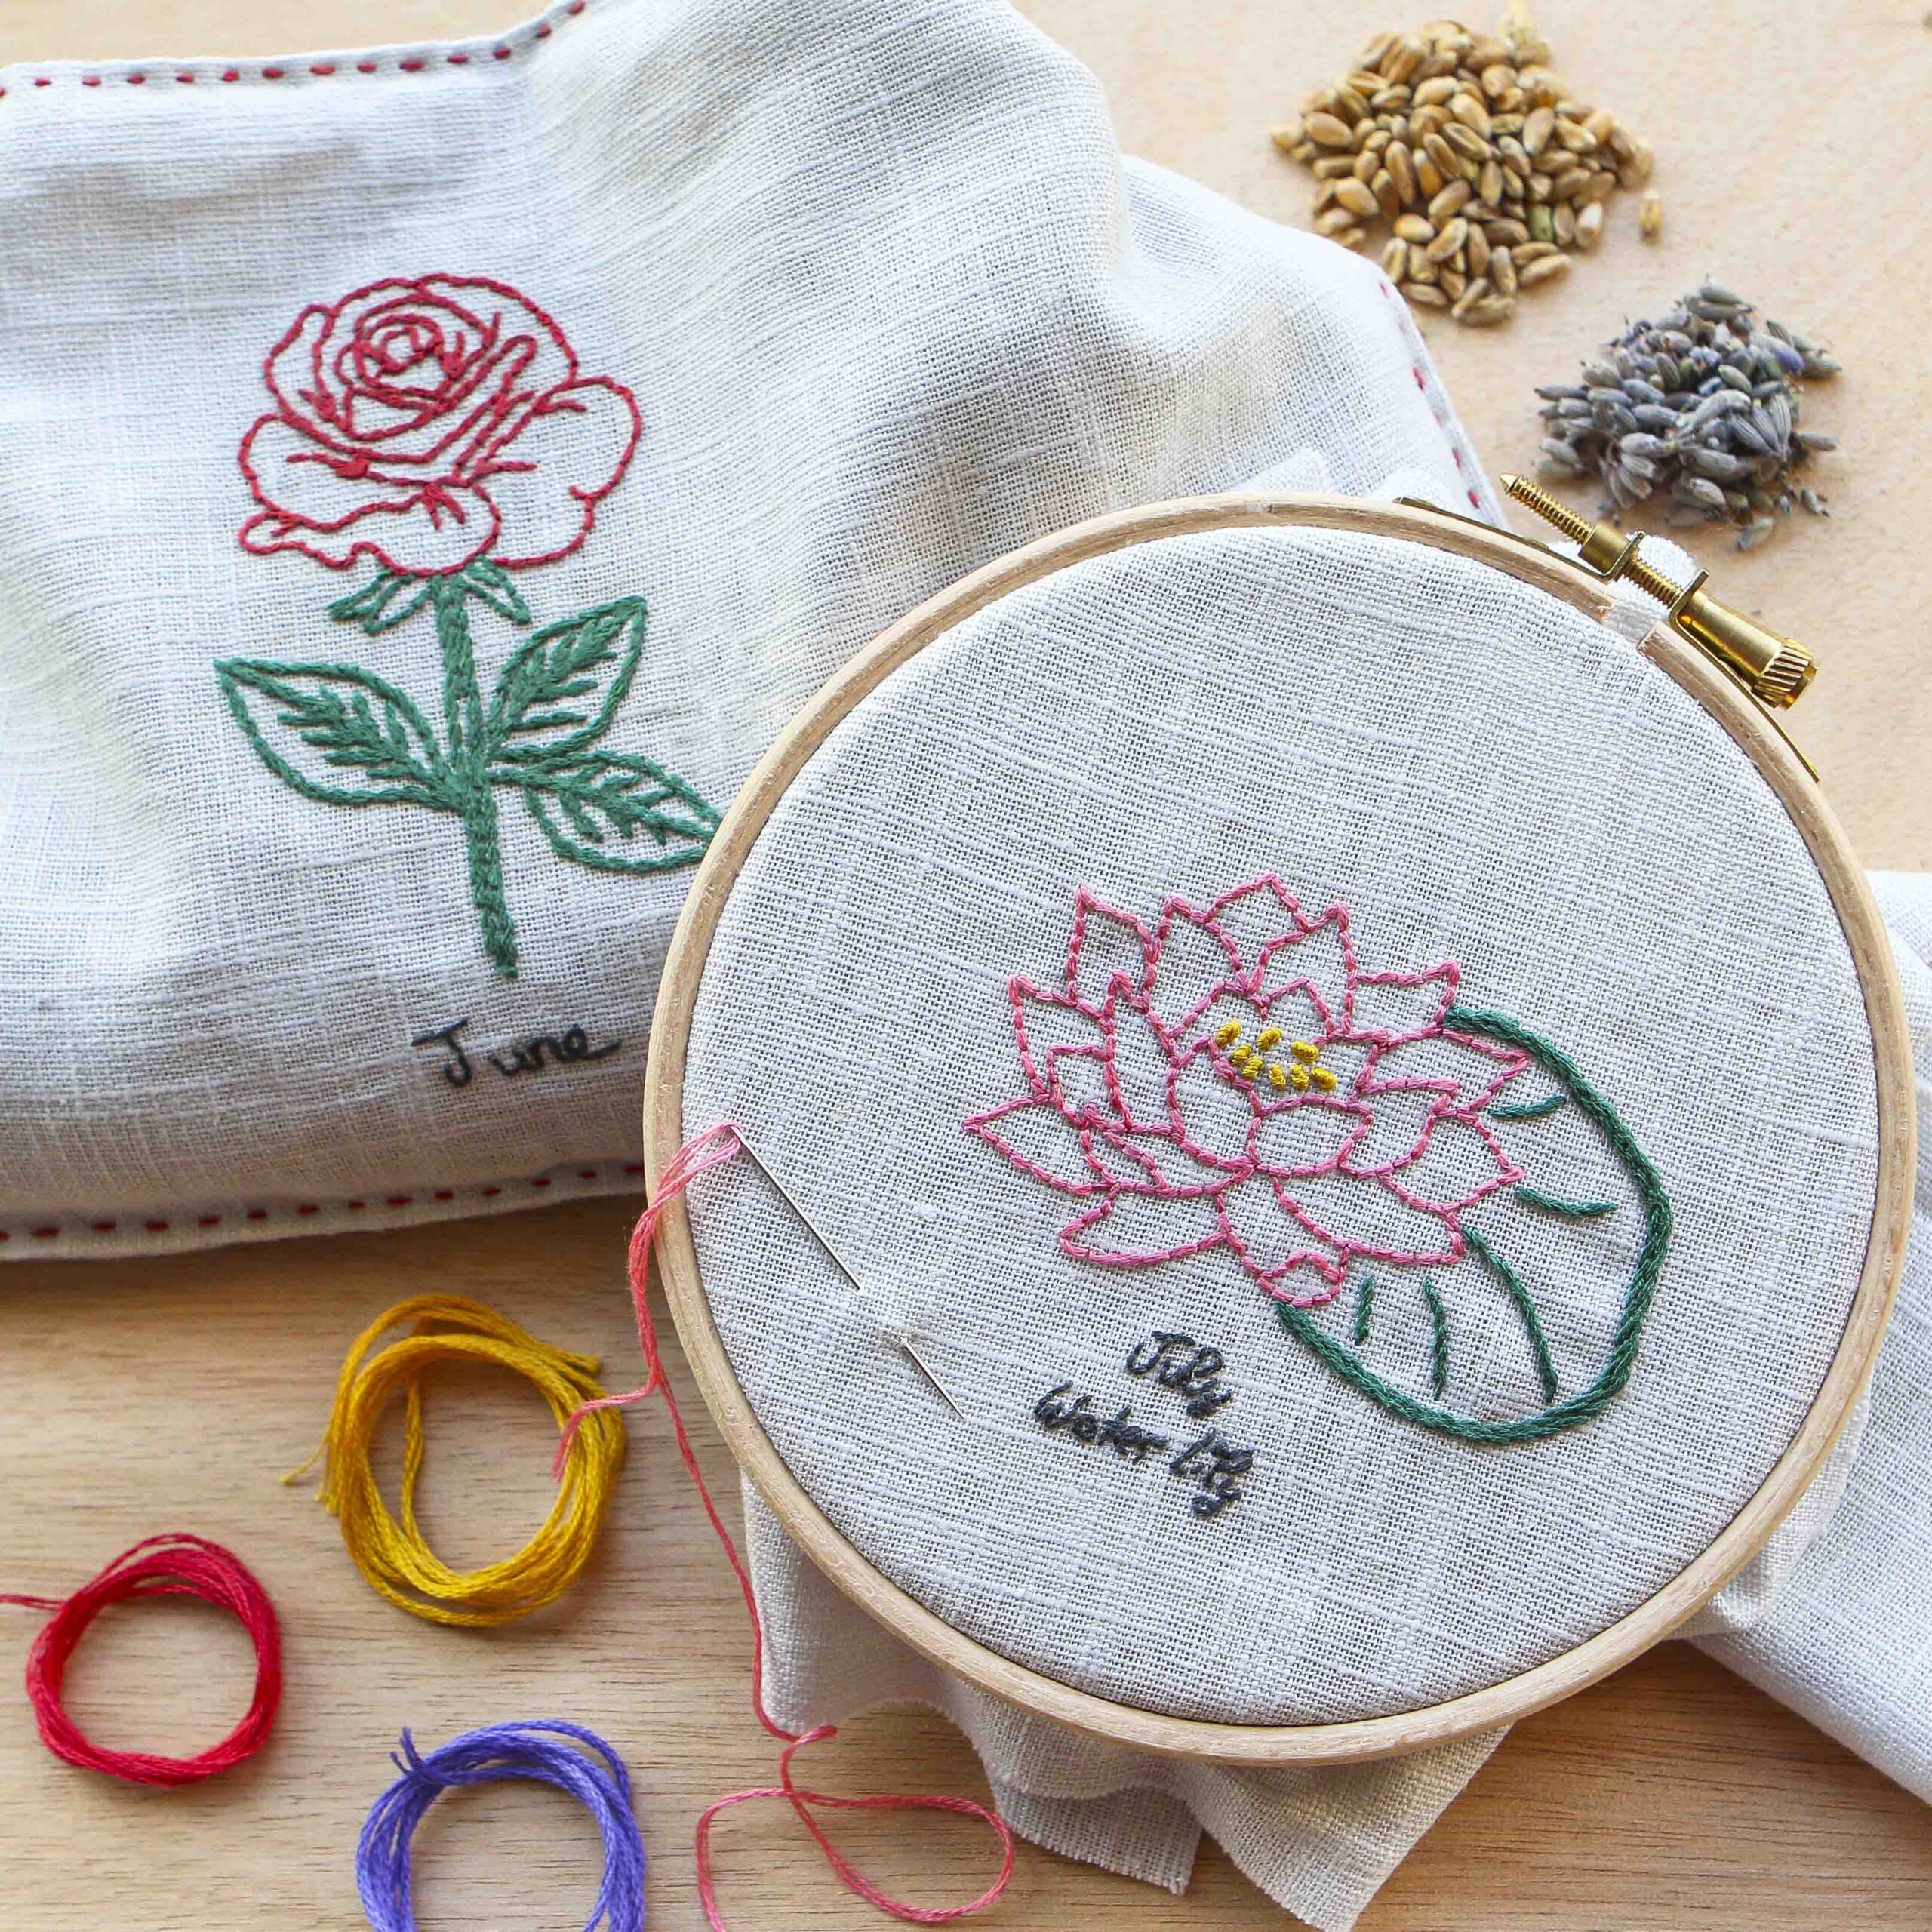 DIY Birth Flower Wheat bag Embroidery Craft Kit